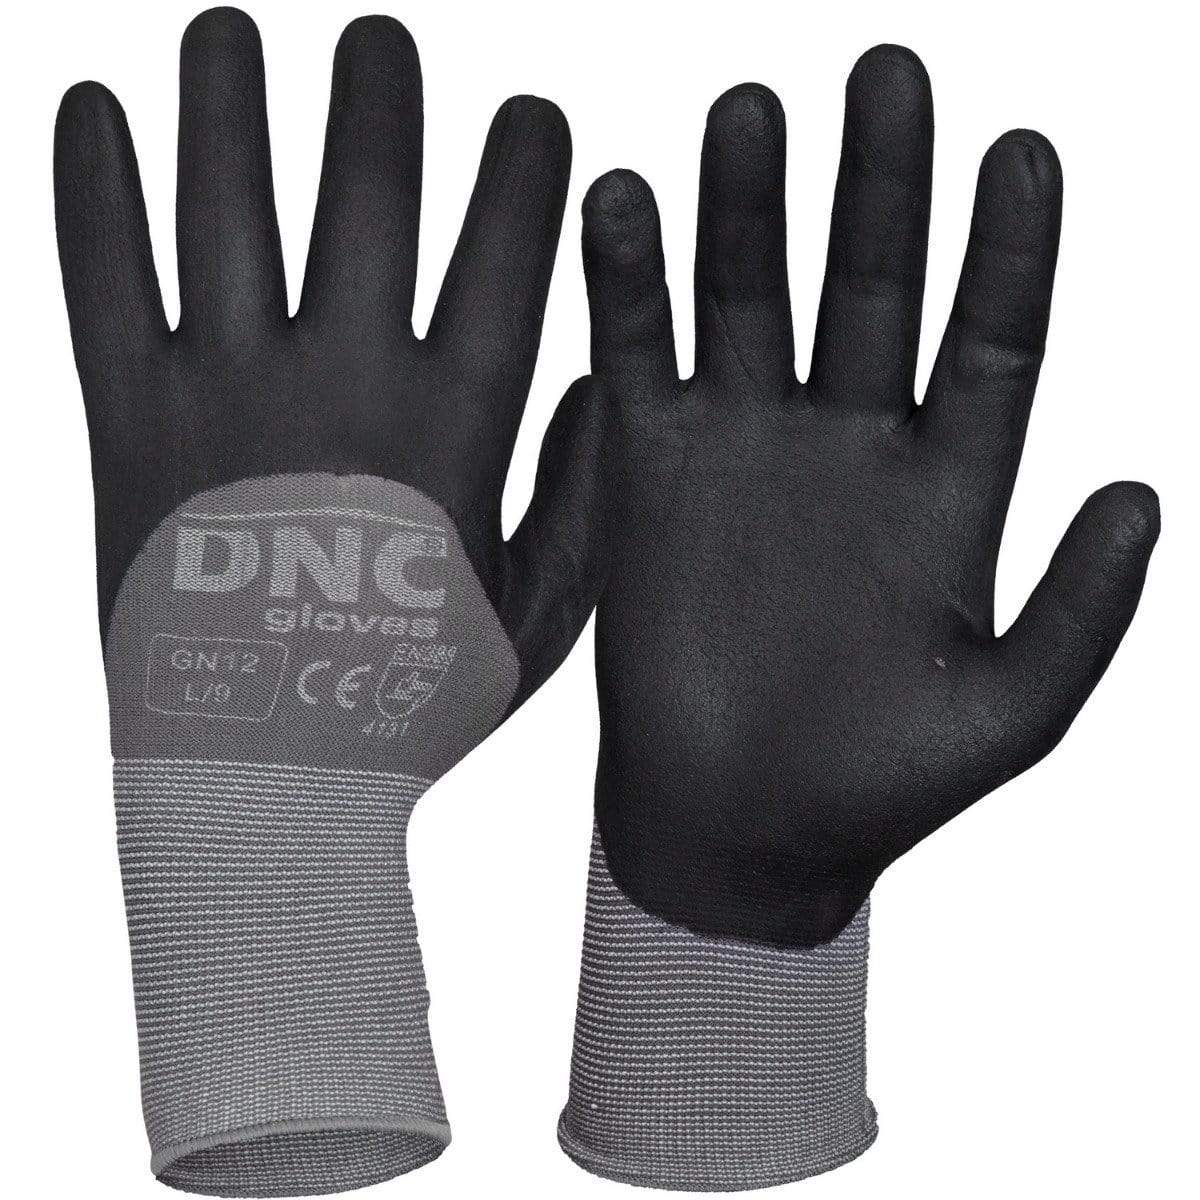 Dnc Workwear Premium Nitrile Supaflex 3/4 Coating - GN12 PPE DNC Workwear Black/Grey S/7 